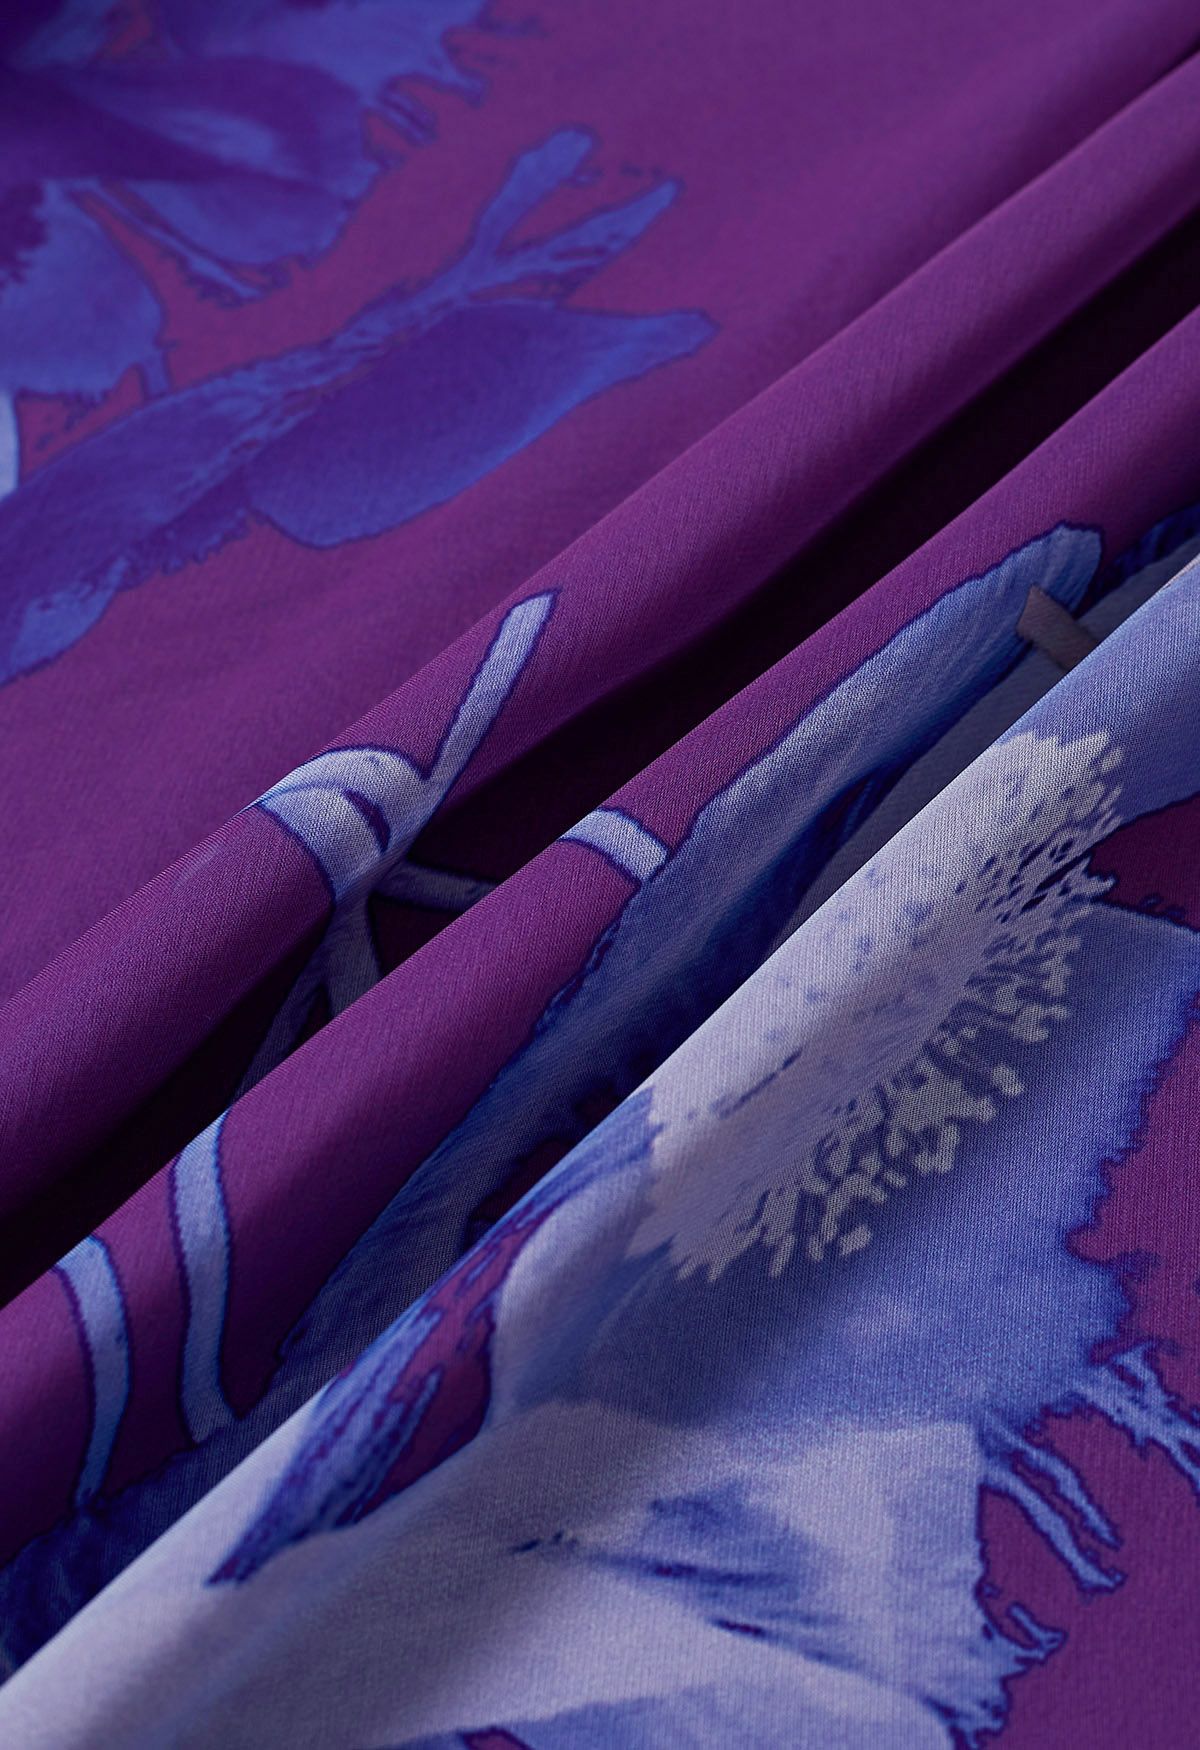 Purple Passion Floral Chiffon Maxi Skirt